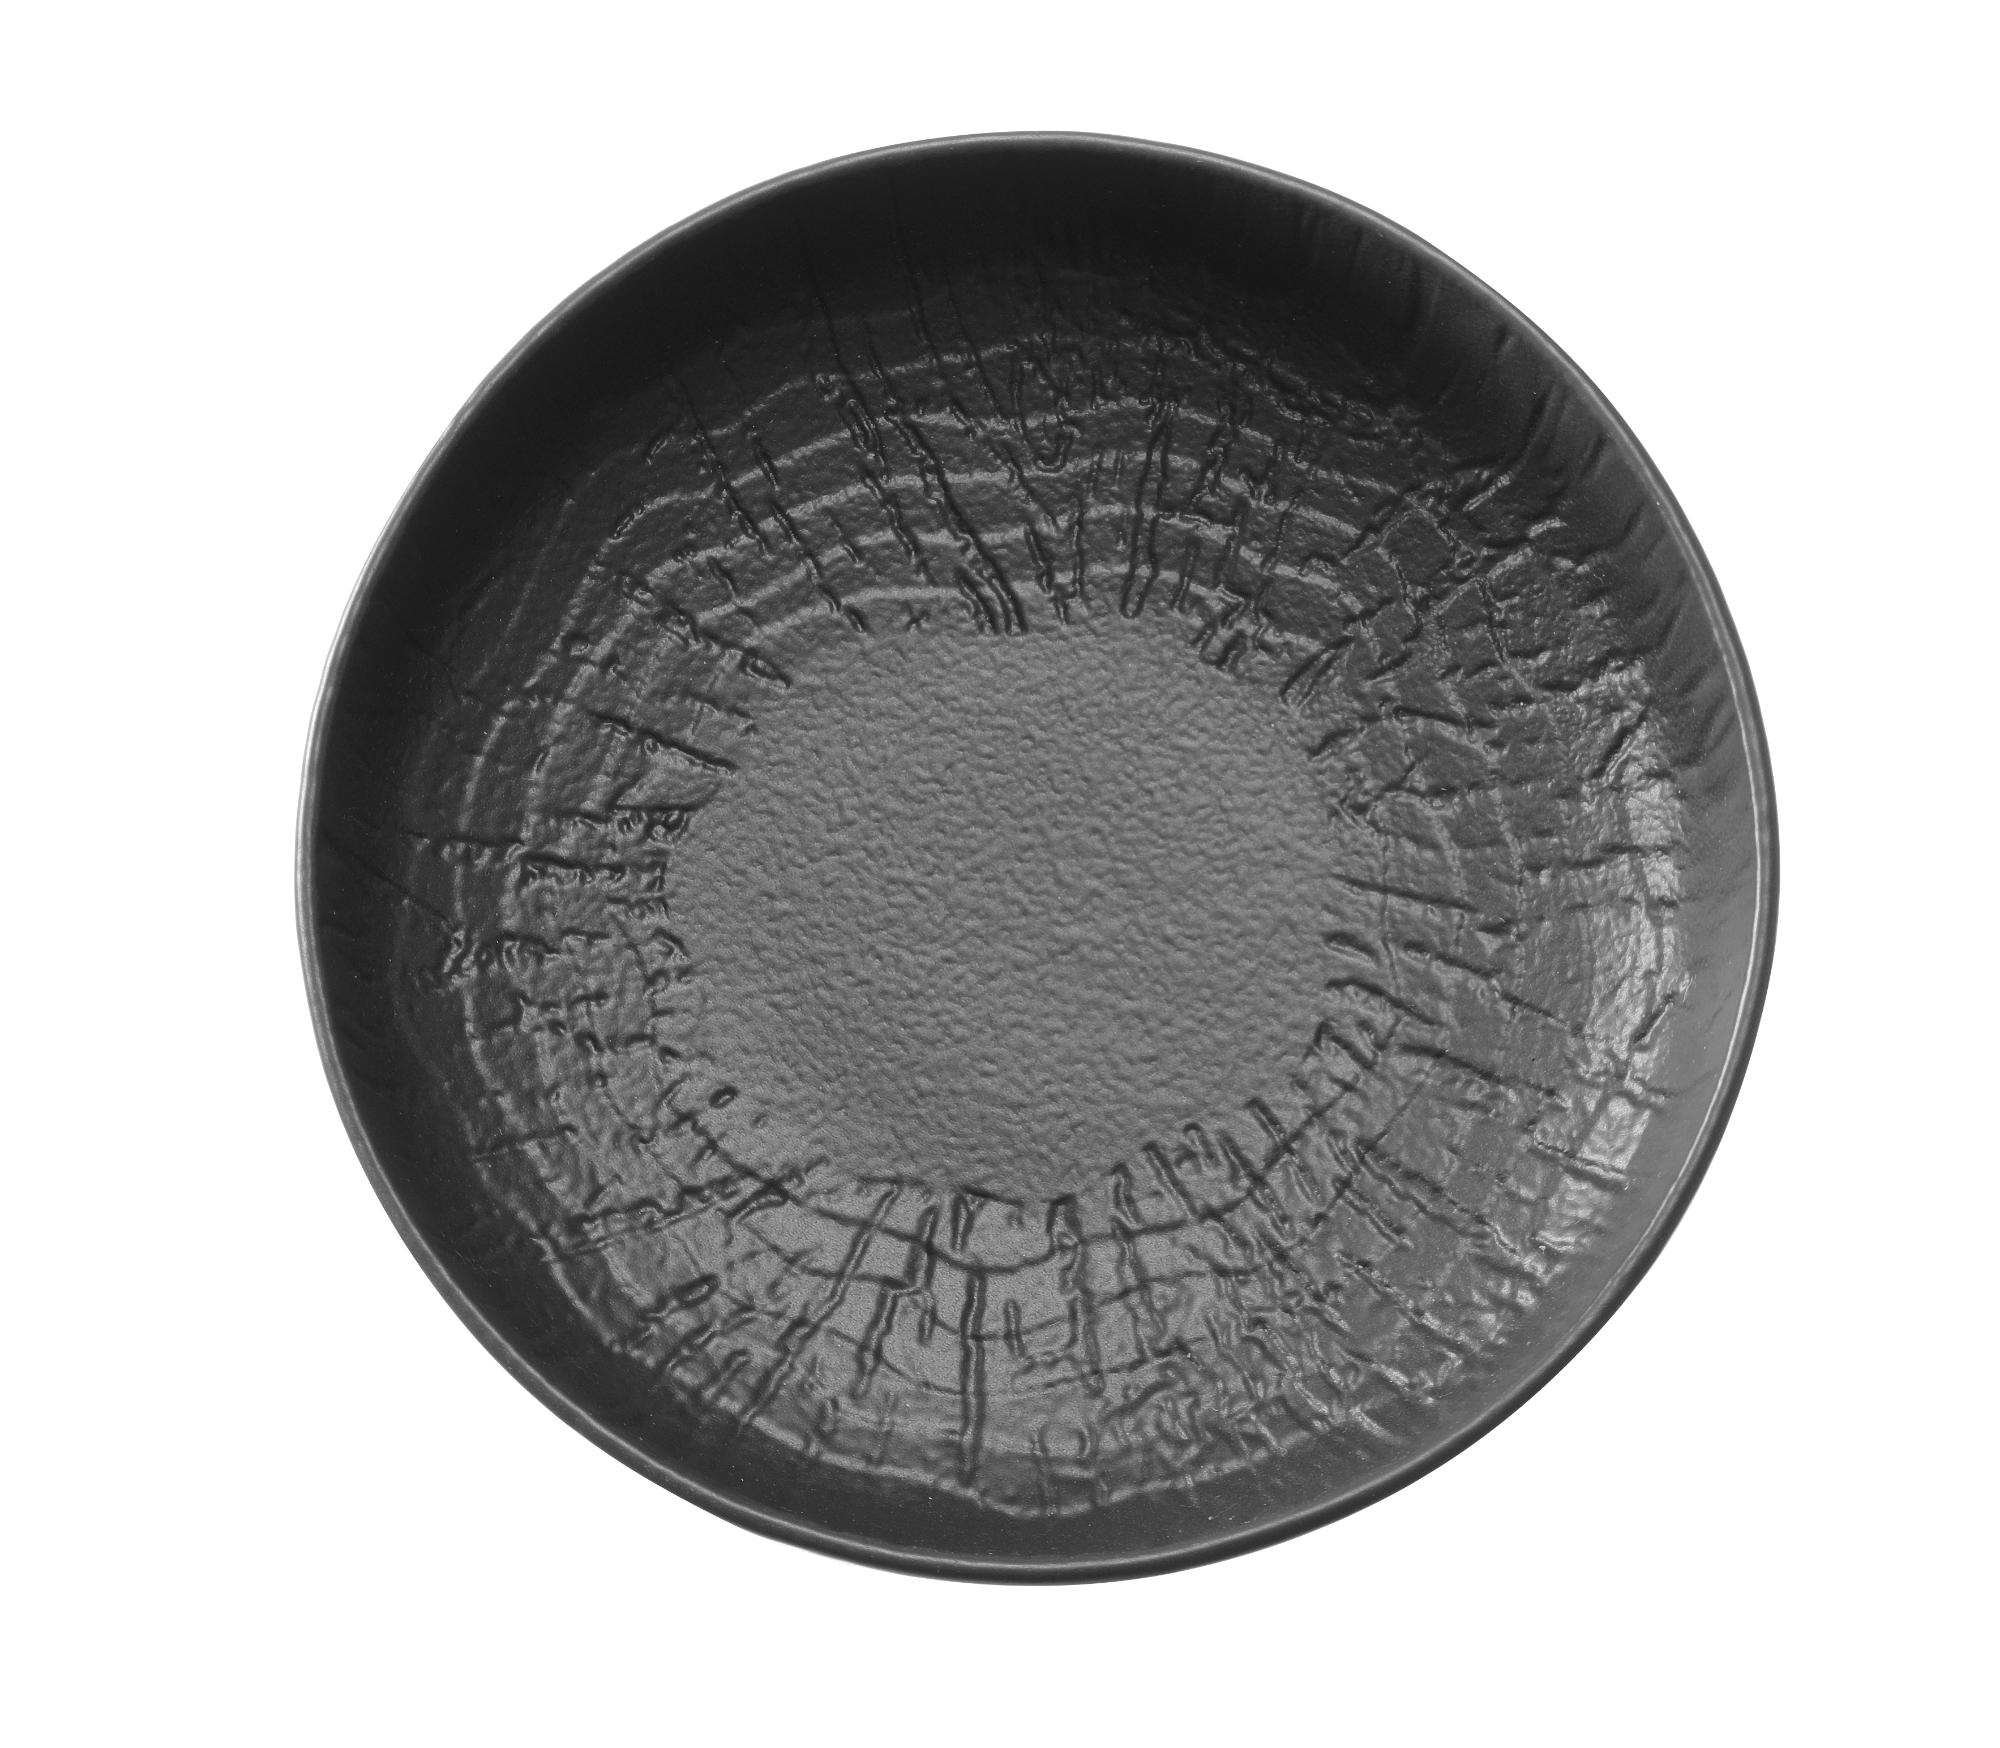 Crust shallow bowl, 110mm